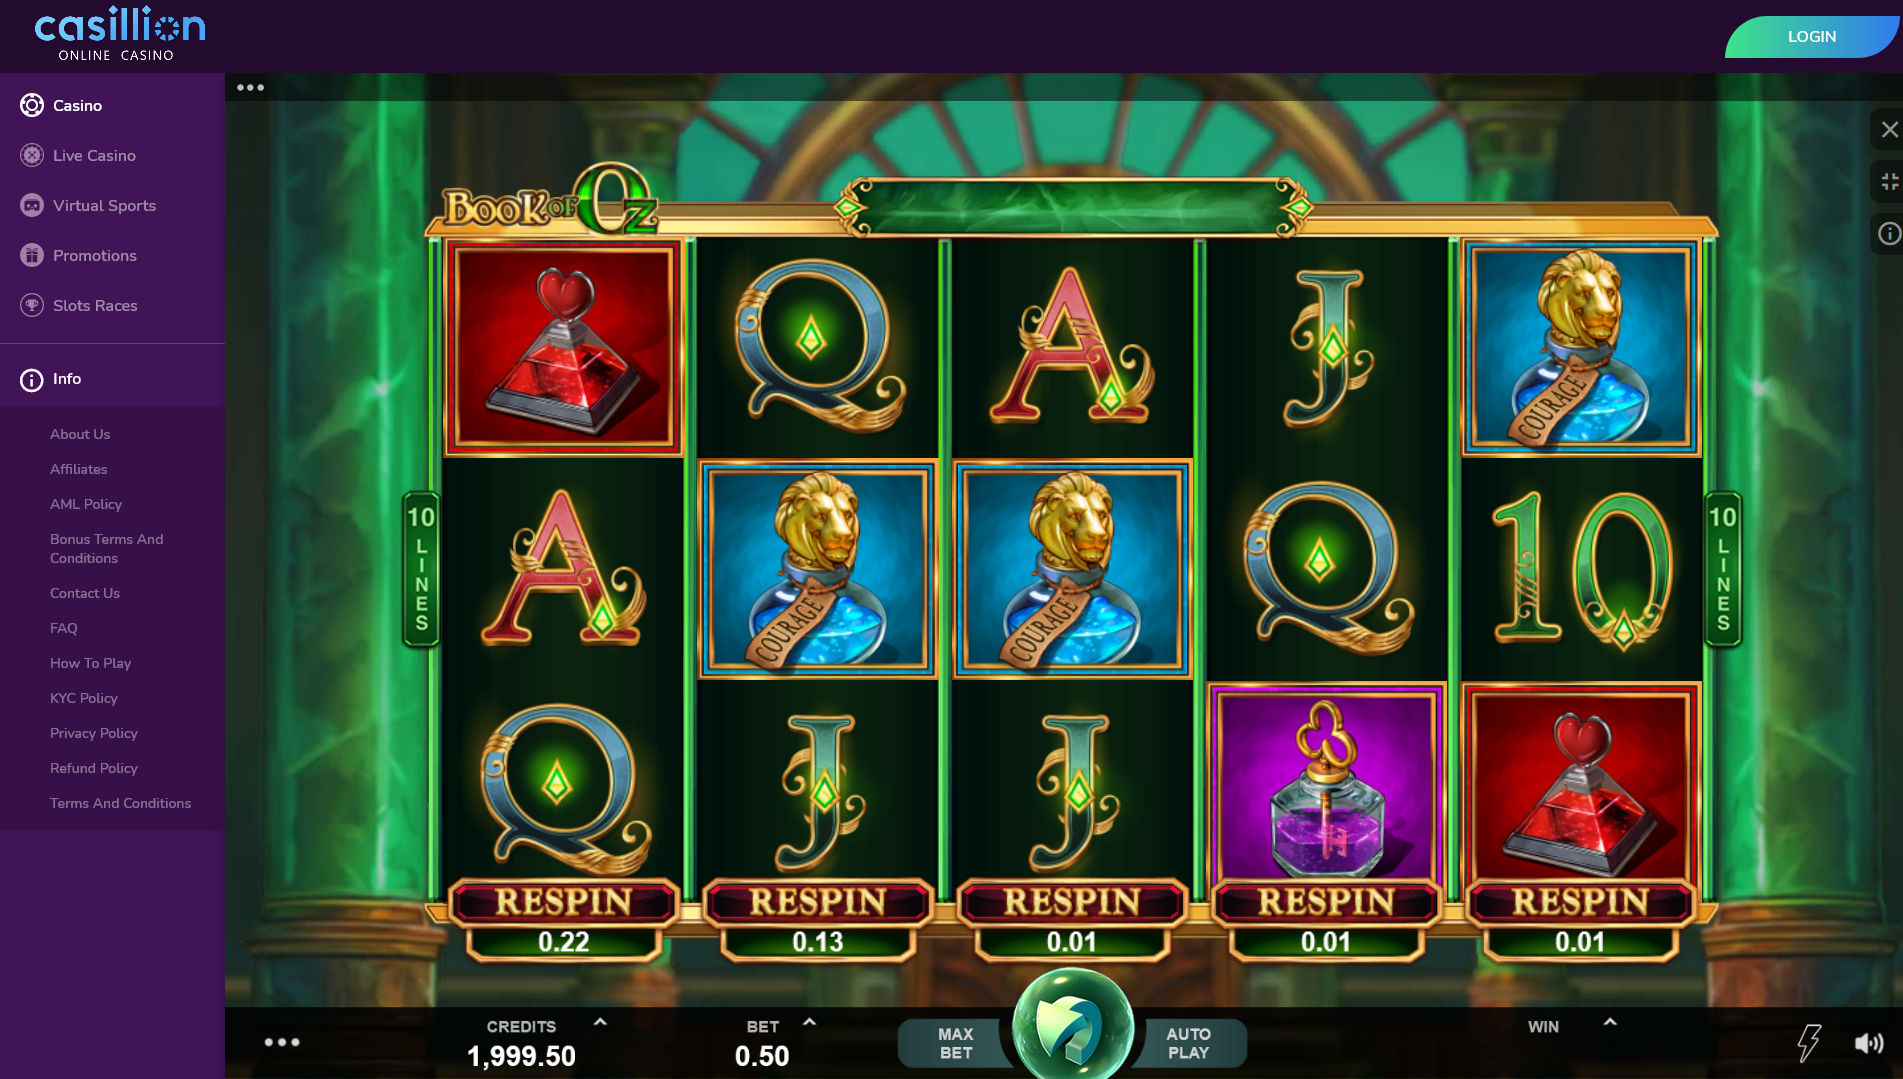 Casillion Casino Slot Games